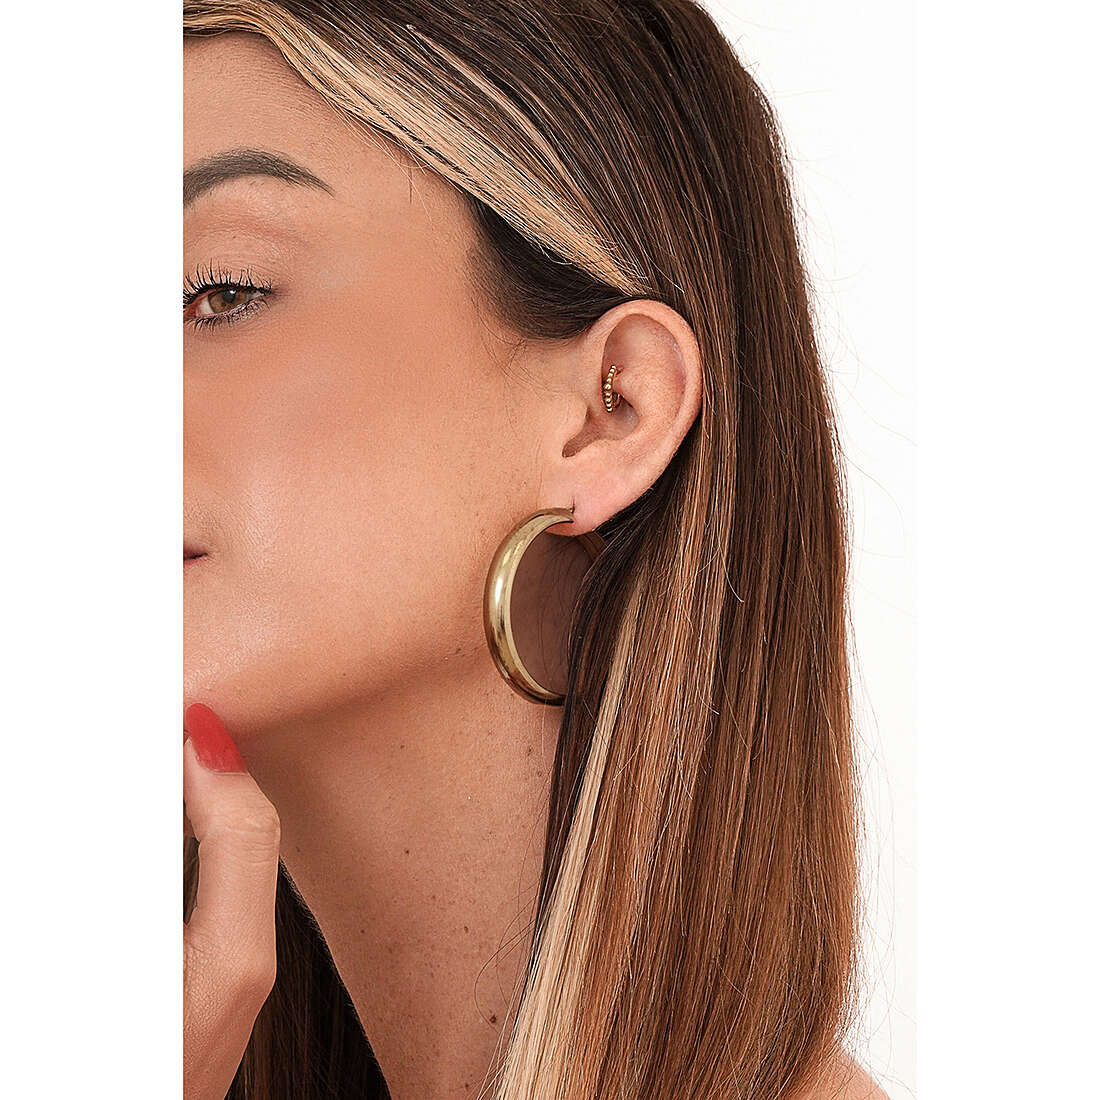 GioiaPura earrings woman GYOARW0315-4.5 wearing